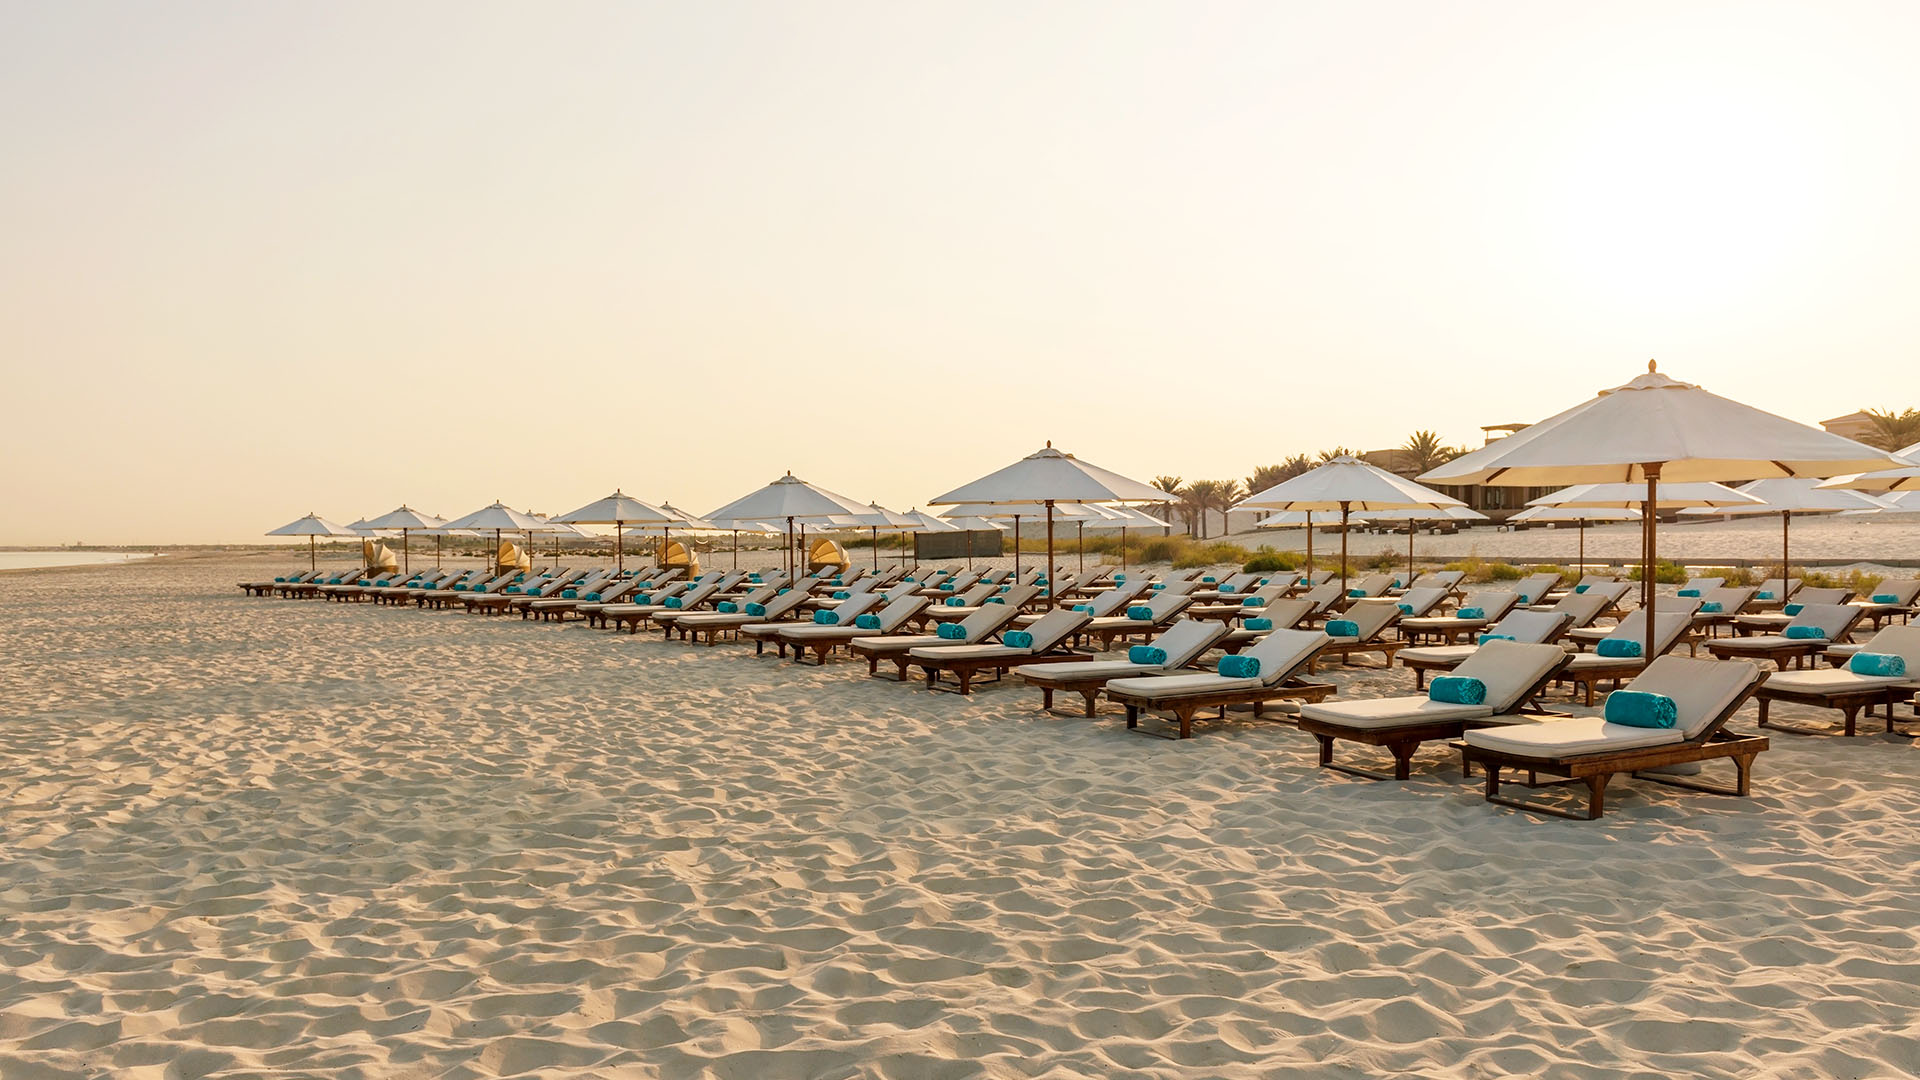 several rows of beach loungers and umbrellas on the beach at The St. Regis Saadiyat Island Resort, Abu Dhabi